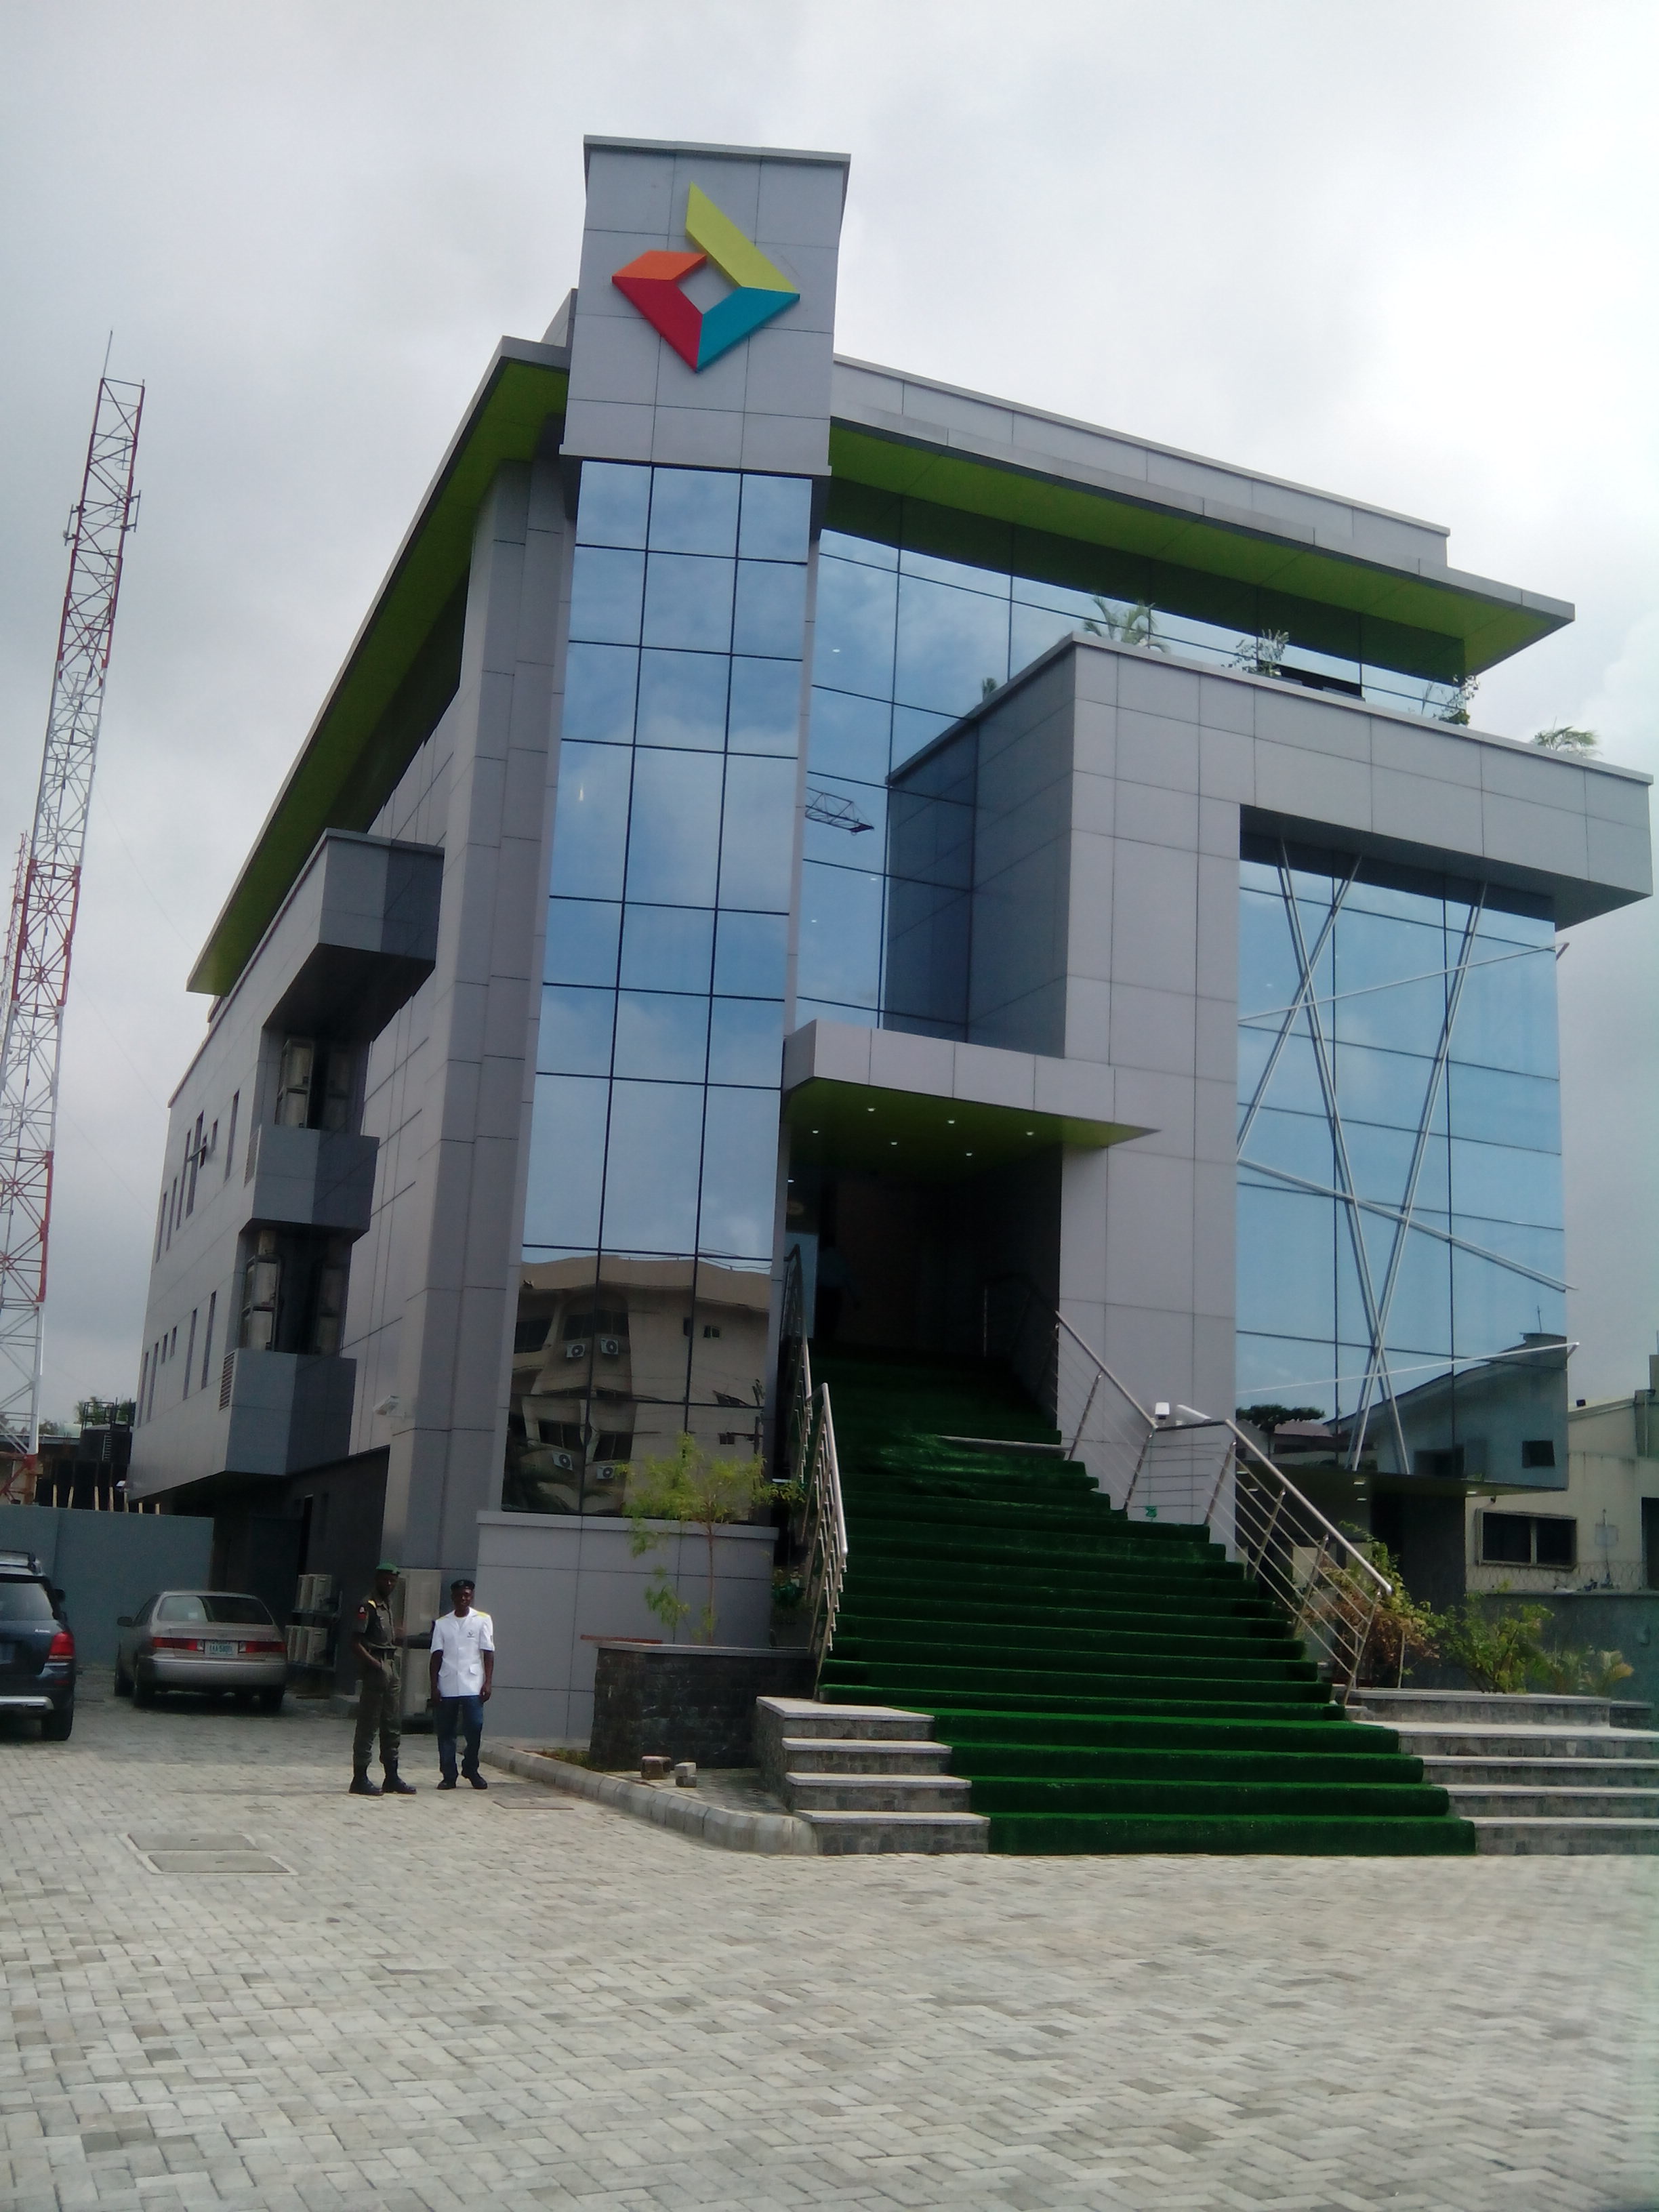 3-storey office block for Diamond 
Bank Plc, Ajose Adeogun Branch,
Lagos